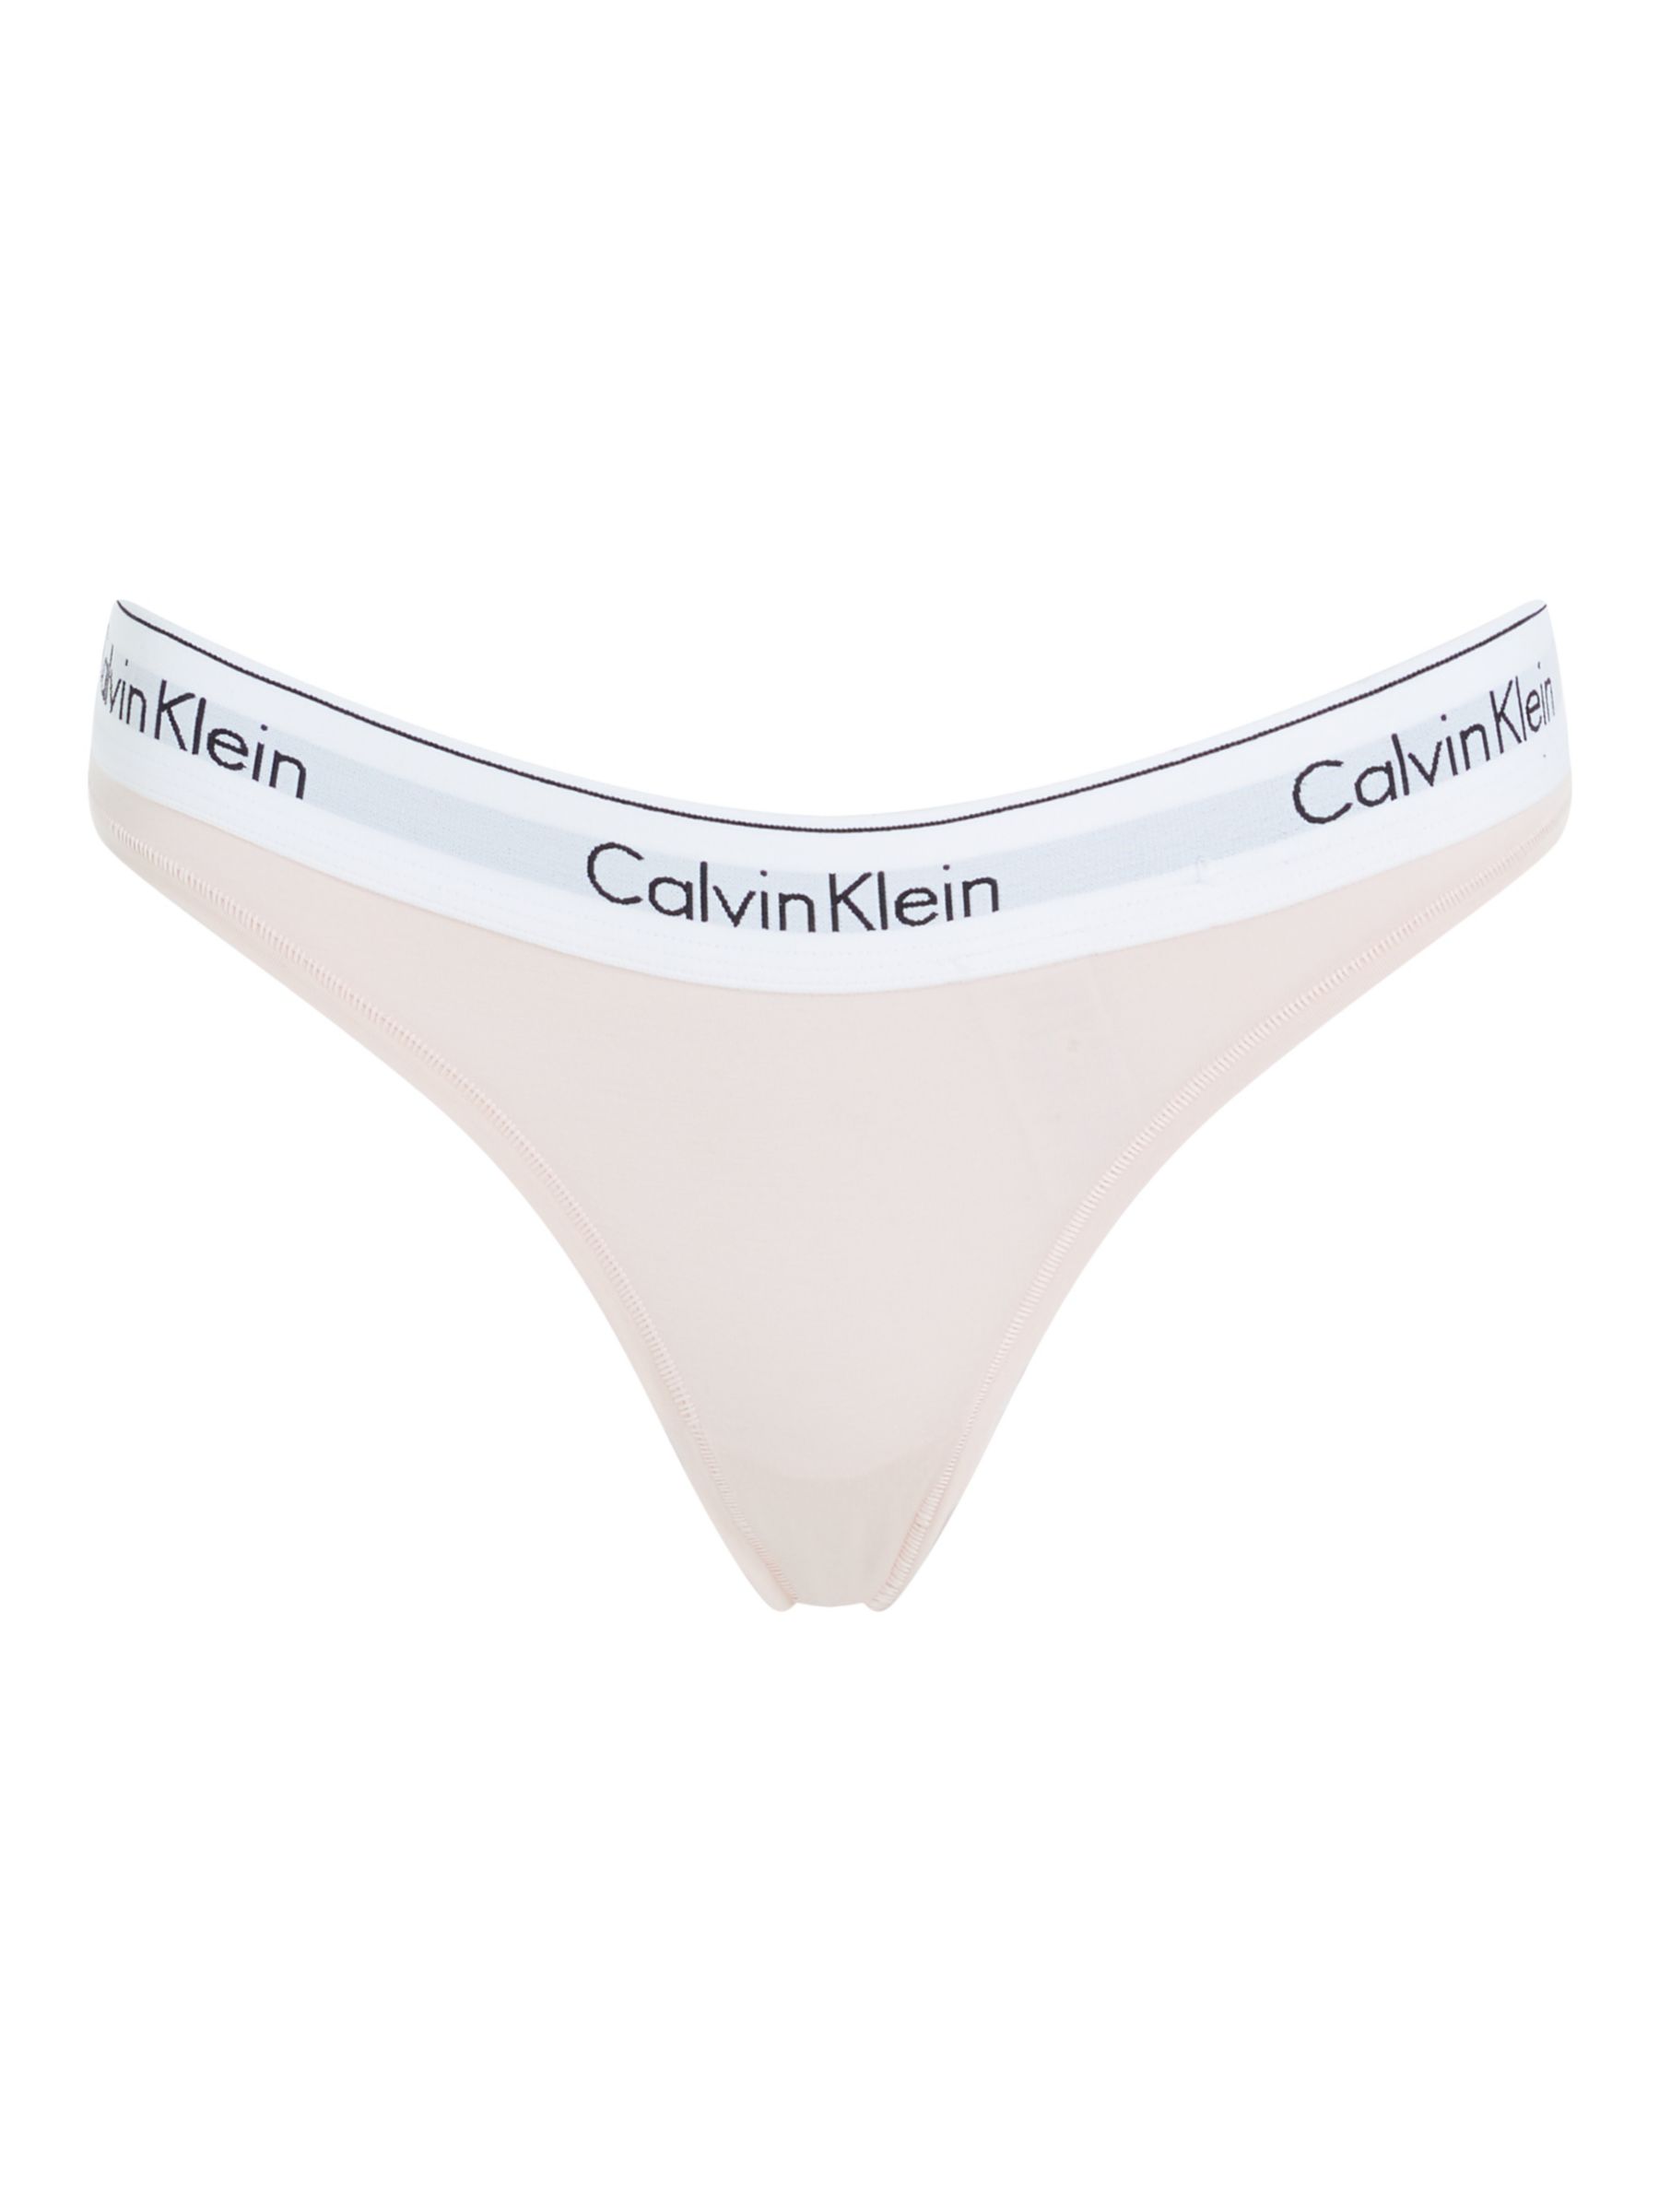 Calvin Klein Modern Cotton Thong In Hot Pink for Women